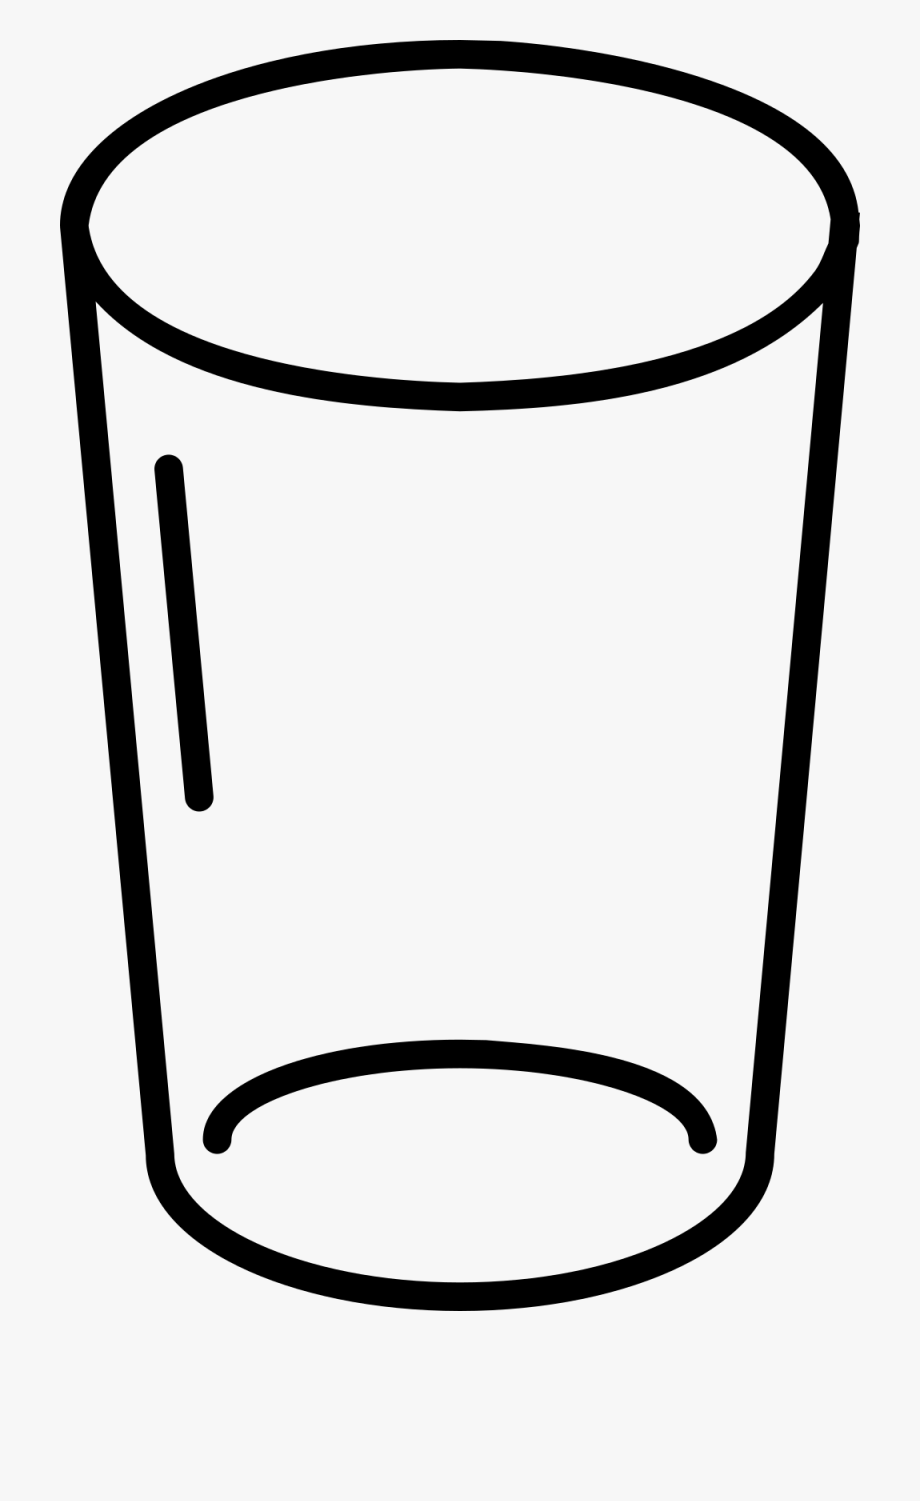 empty glass cup clip art